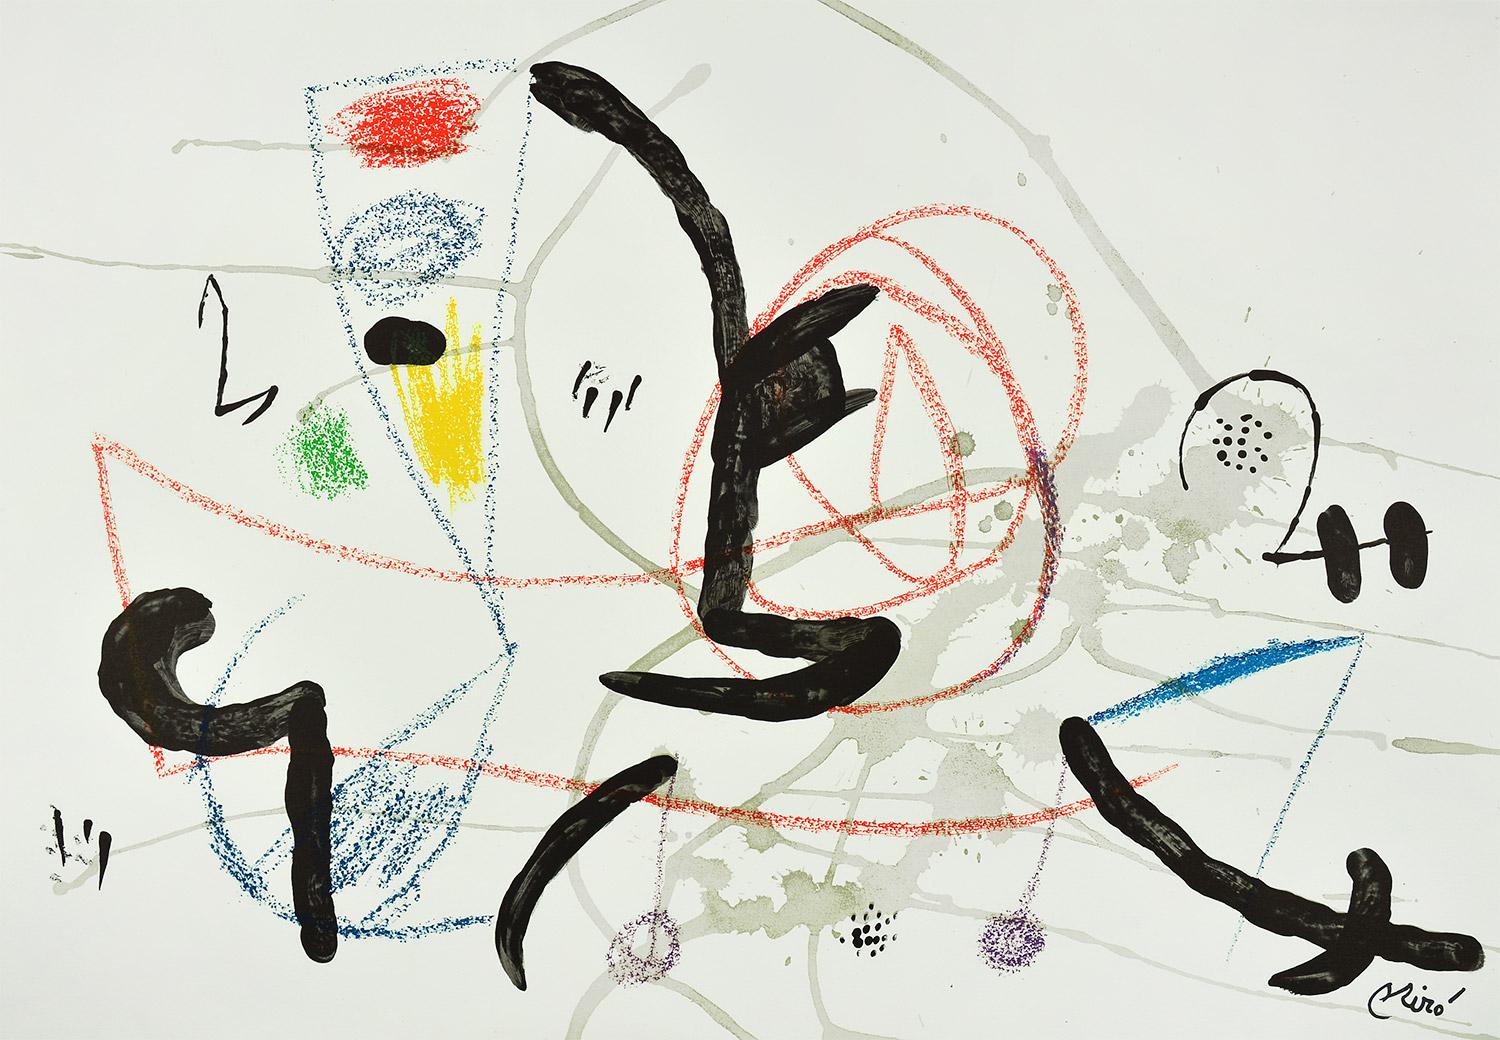 Joan Miró - Maravillas con variaciones acrósticas en el jardín de Miró XI
Date of creation: 1975
Medium: Lithograph on Gvarro paper
Edition: 1500
Size: 49,5 x 71 cm
Condition: In very good conditions and never framed
Observations: Lithograph on